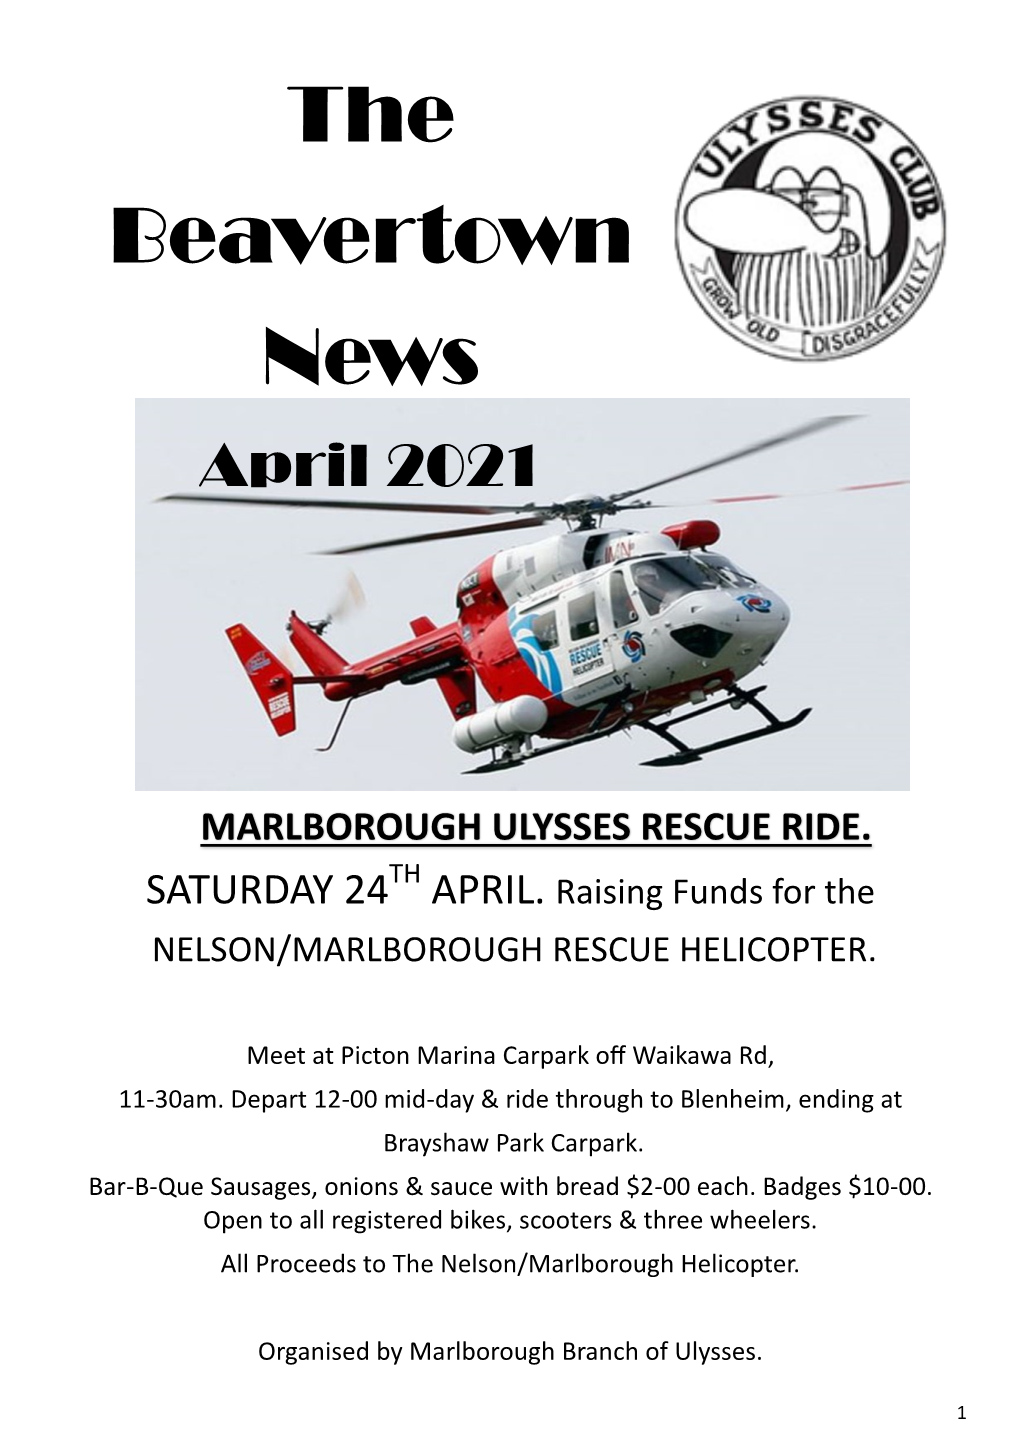 The Beavertown News April 2021